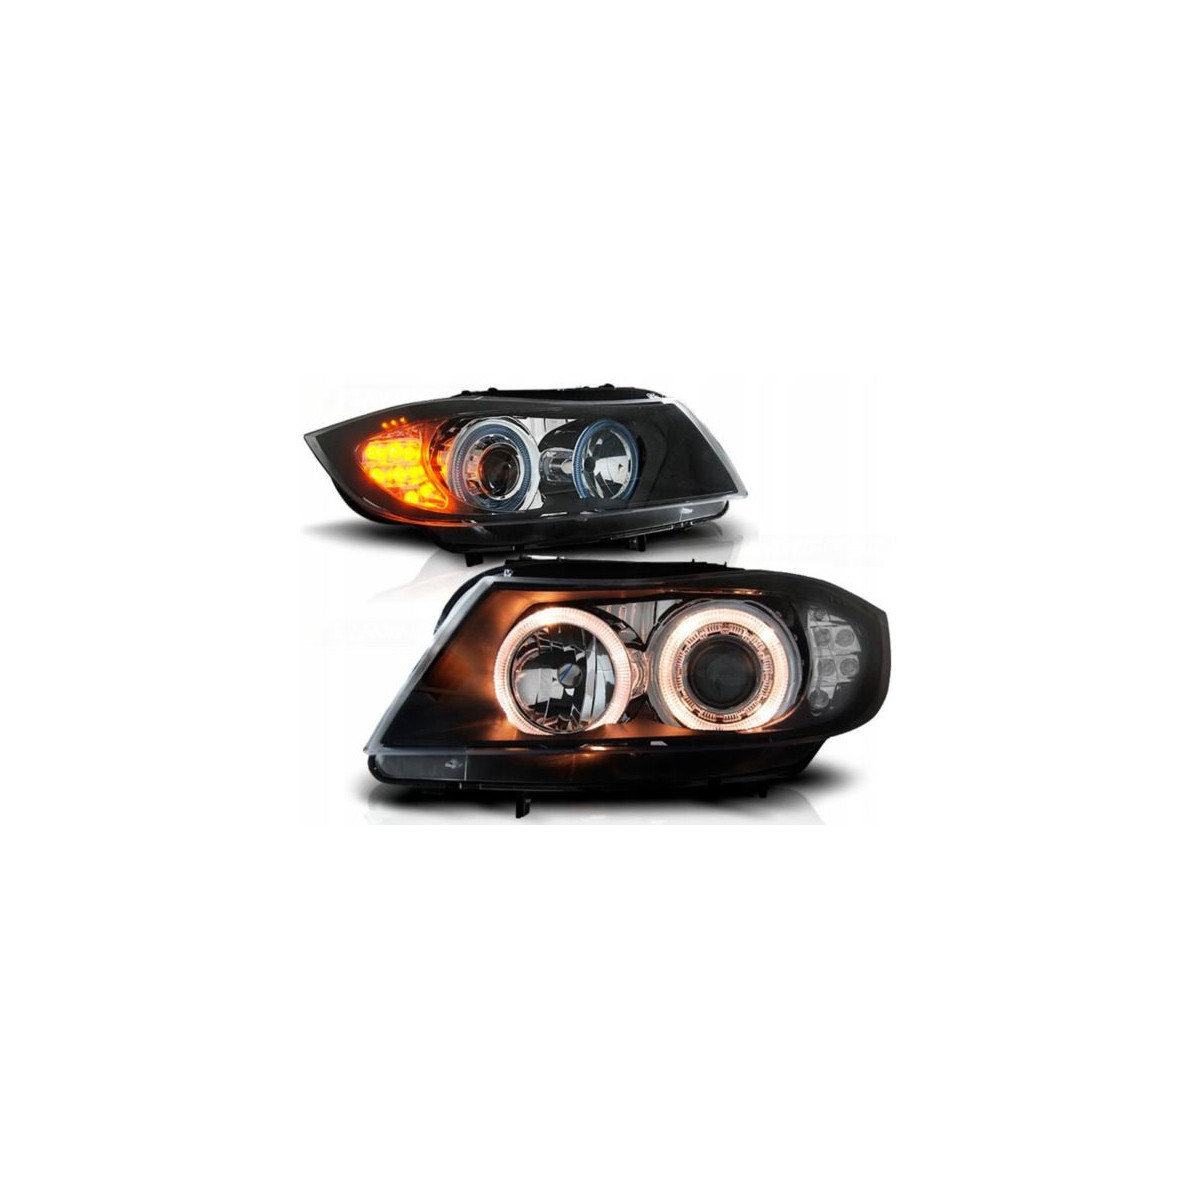 LAMPY ANGEL EYES BMW E90 E91 LED BLINKIER CZARNE